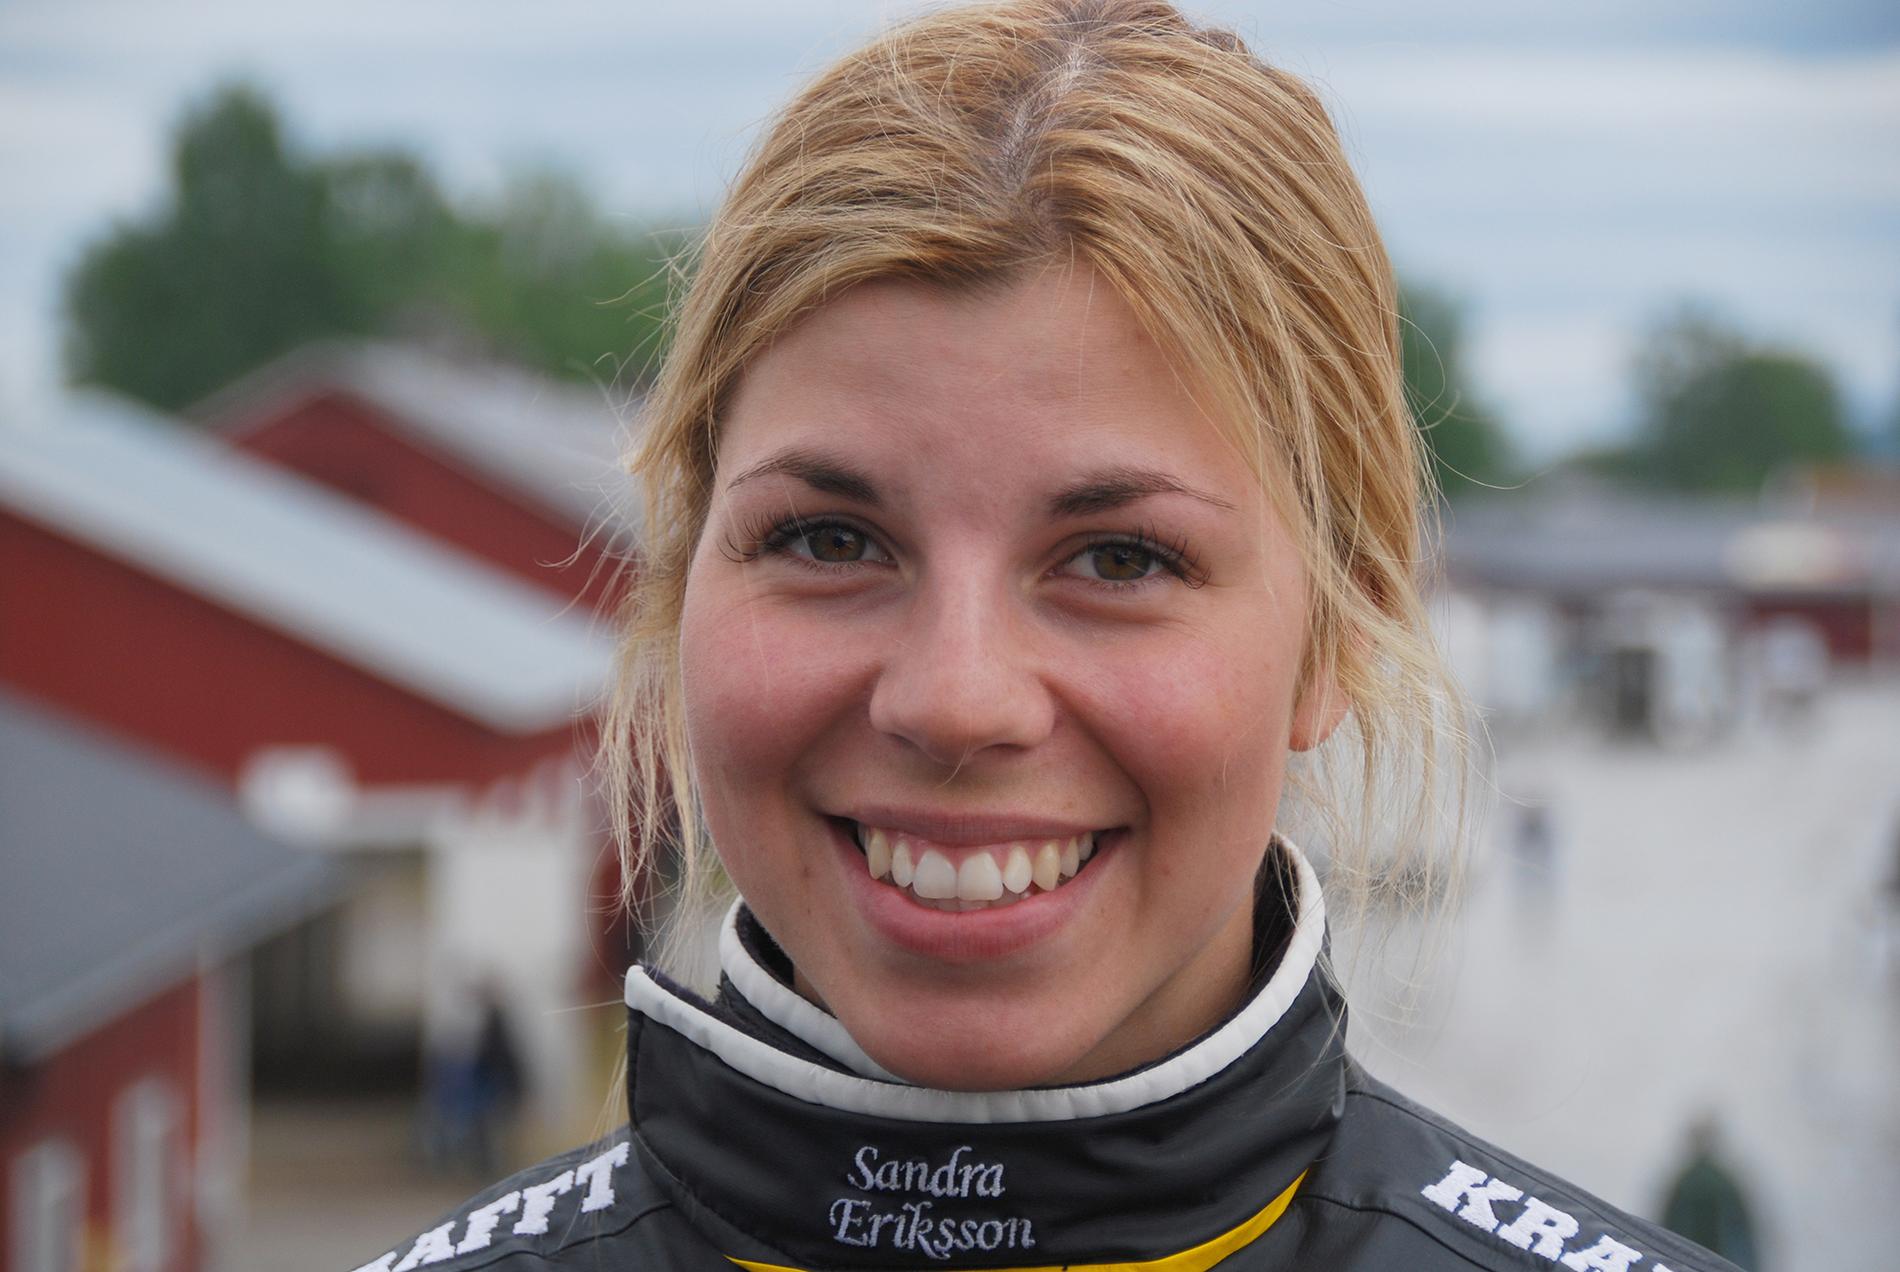 Sandra Eriksson, 28